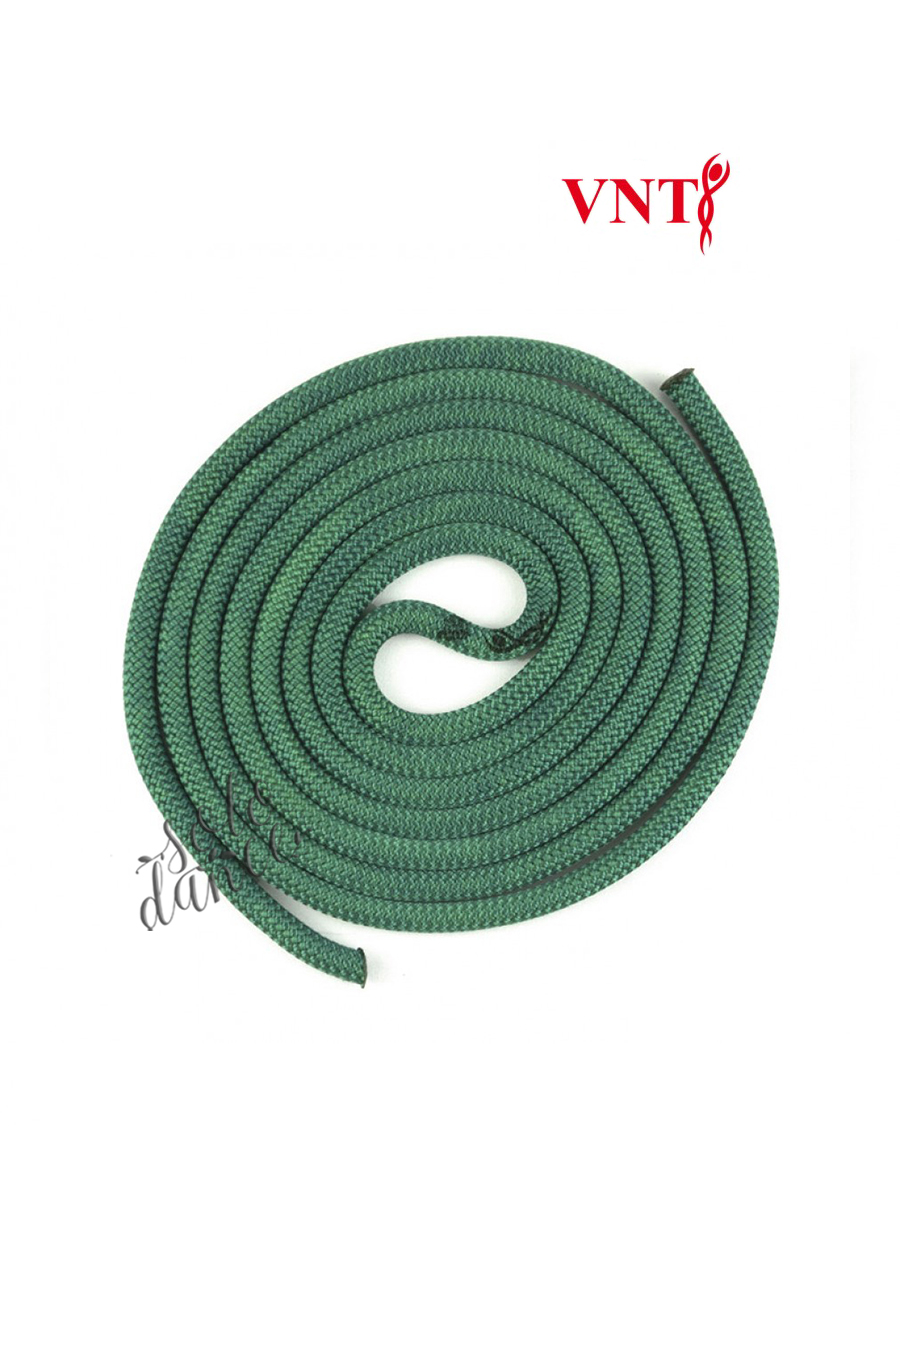 Rope Venturelli for rythmic gymnastic ROP-PL2 Dark Green